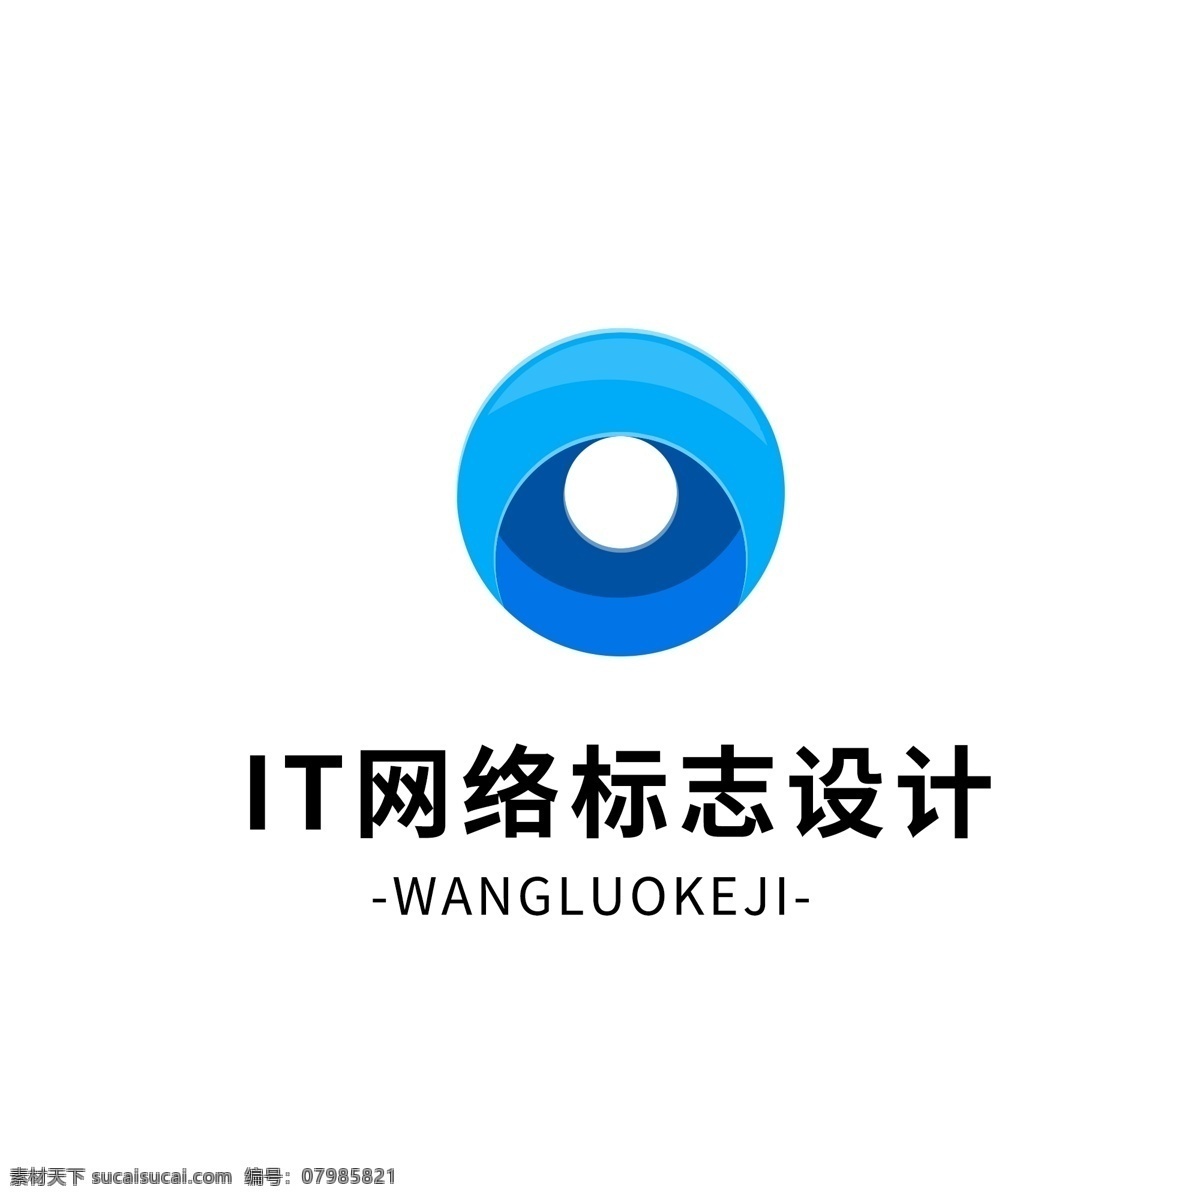 it 网络 标志设计 logo 蓝色 图形 圆形 标志 矢量